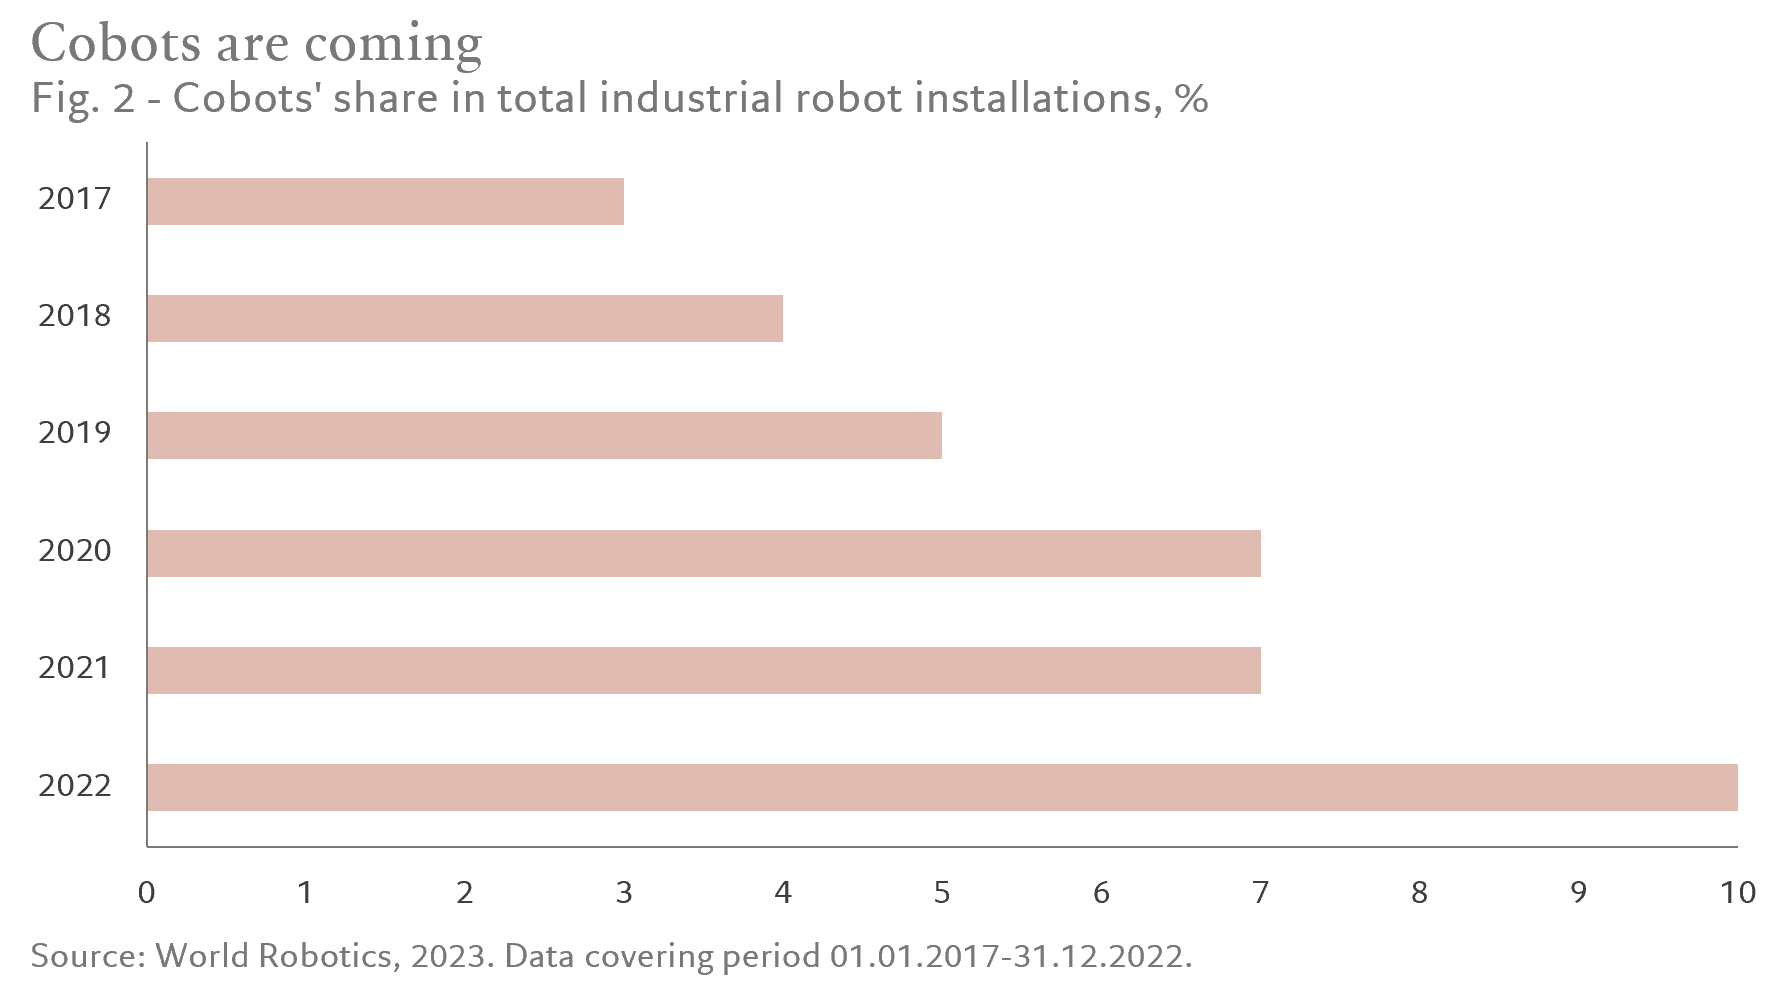 Source: World Robotics, 2023. Data covering period 01.01.2017-31.12.2022.